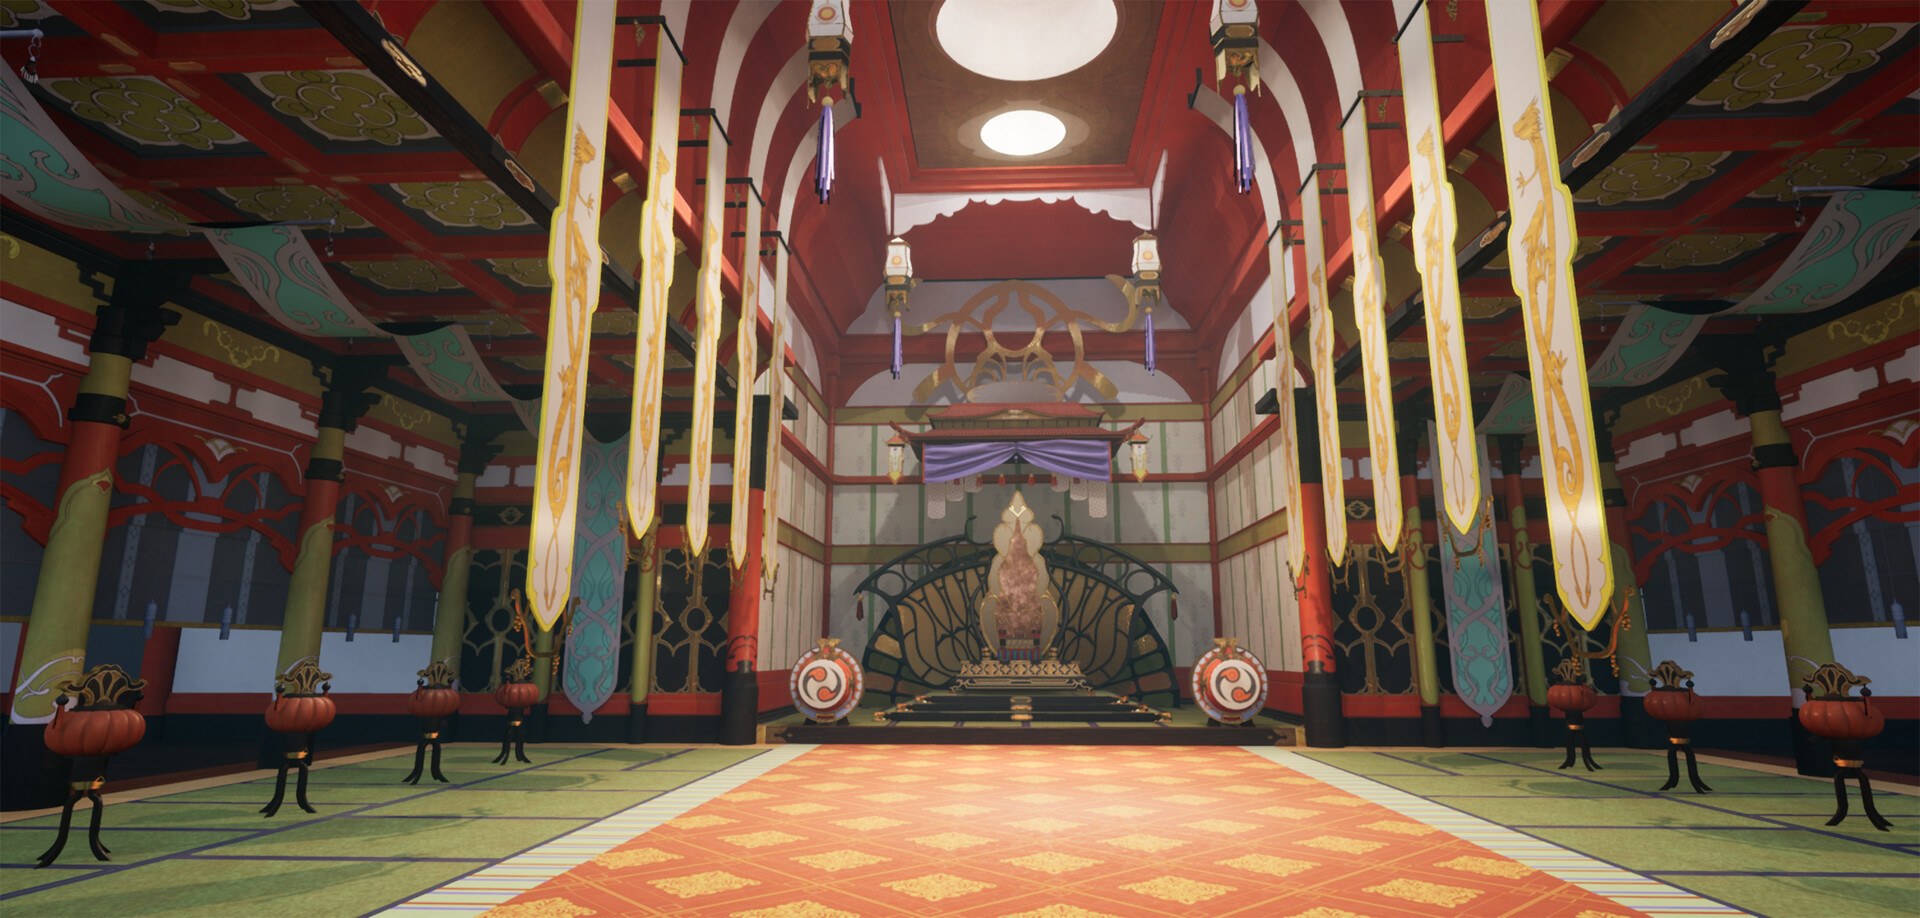 The Palace Of Koramis Throne Room by fatkittycat1000 on DeviantArt